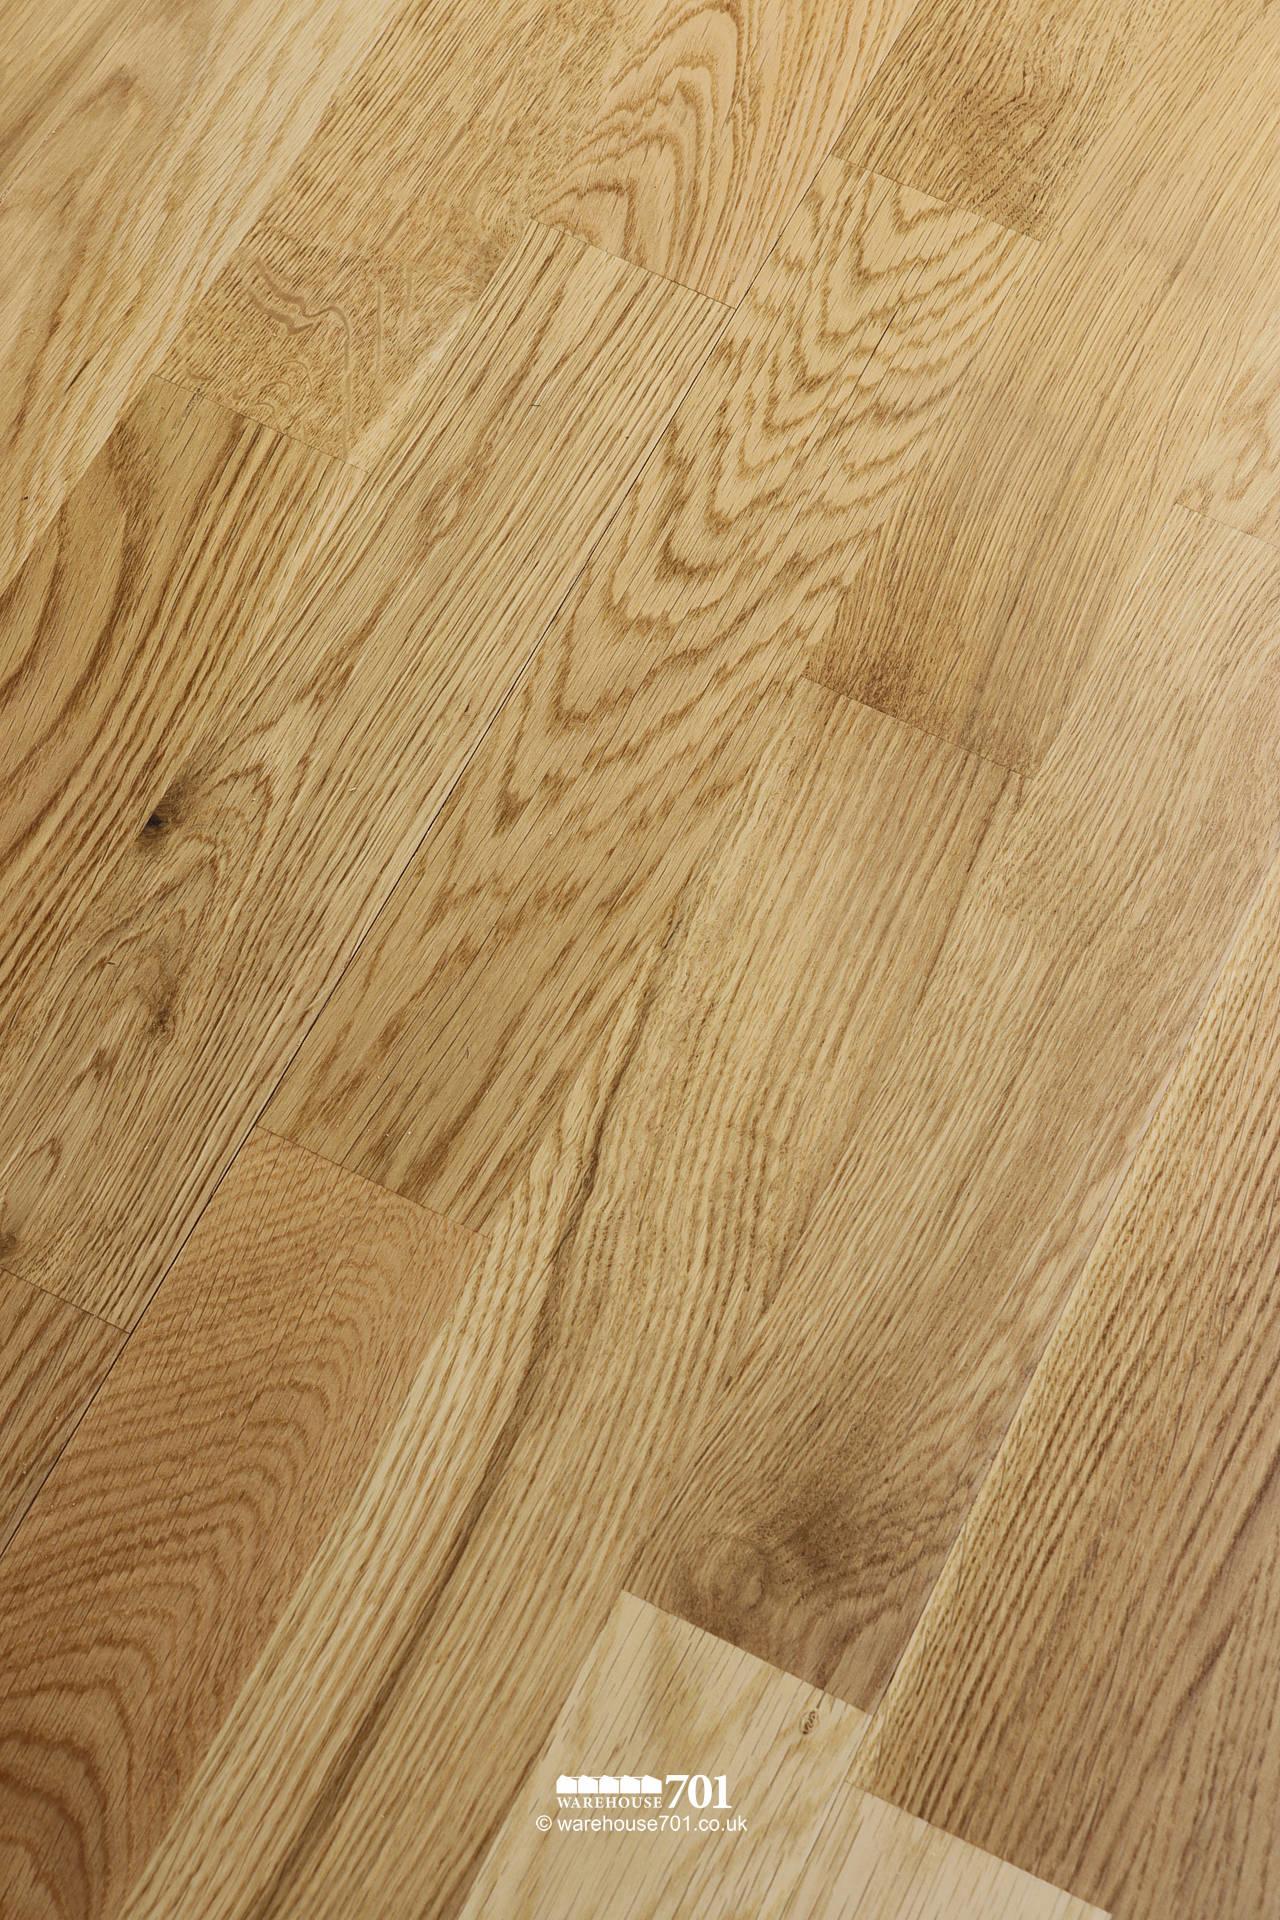 New ‘Oxford’ Engineered Natural Oak Wood Flooring #3